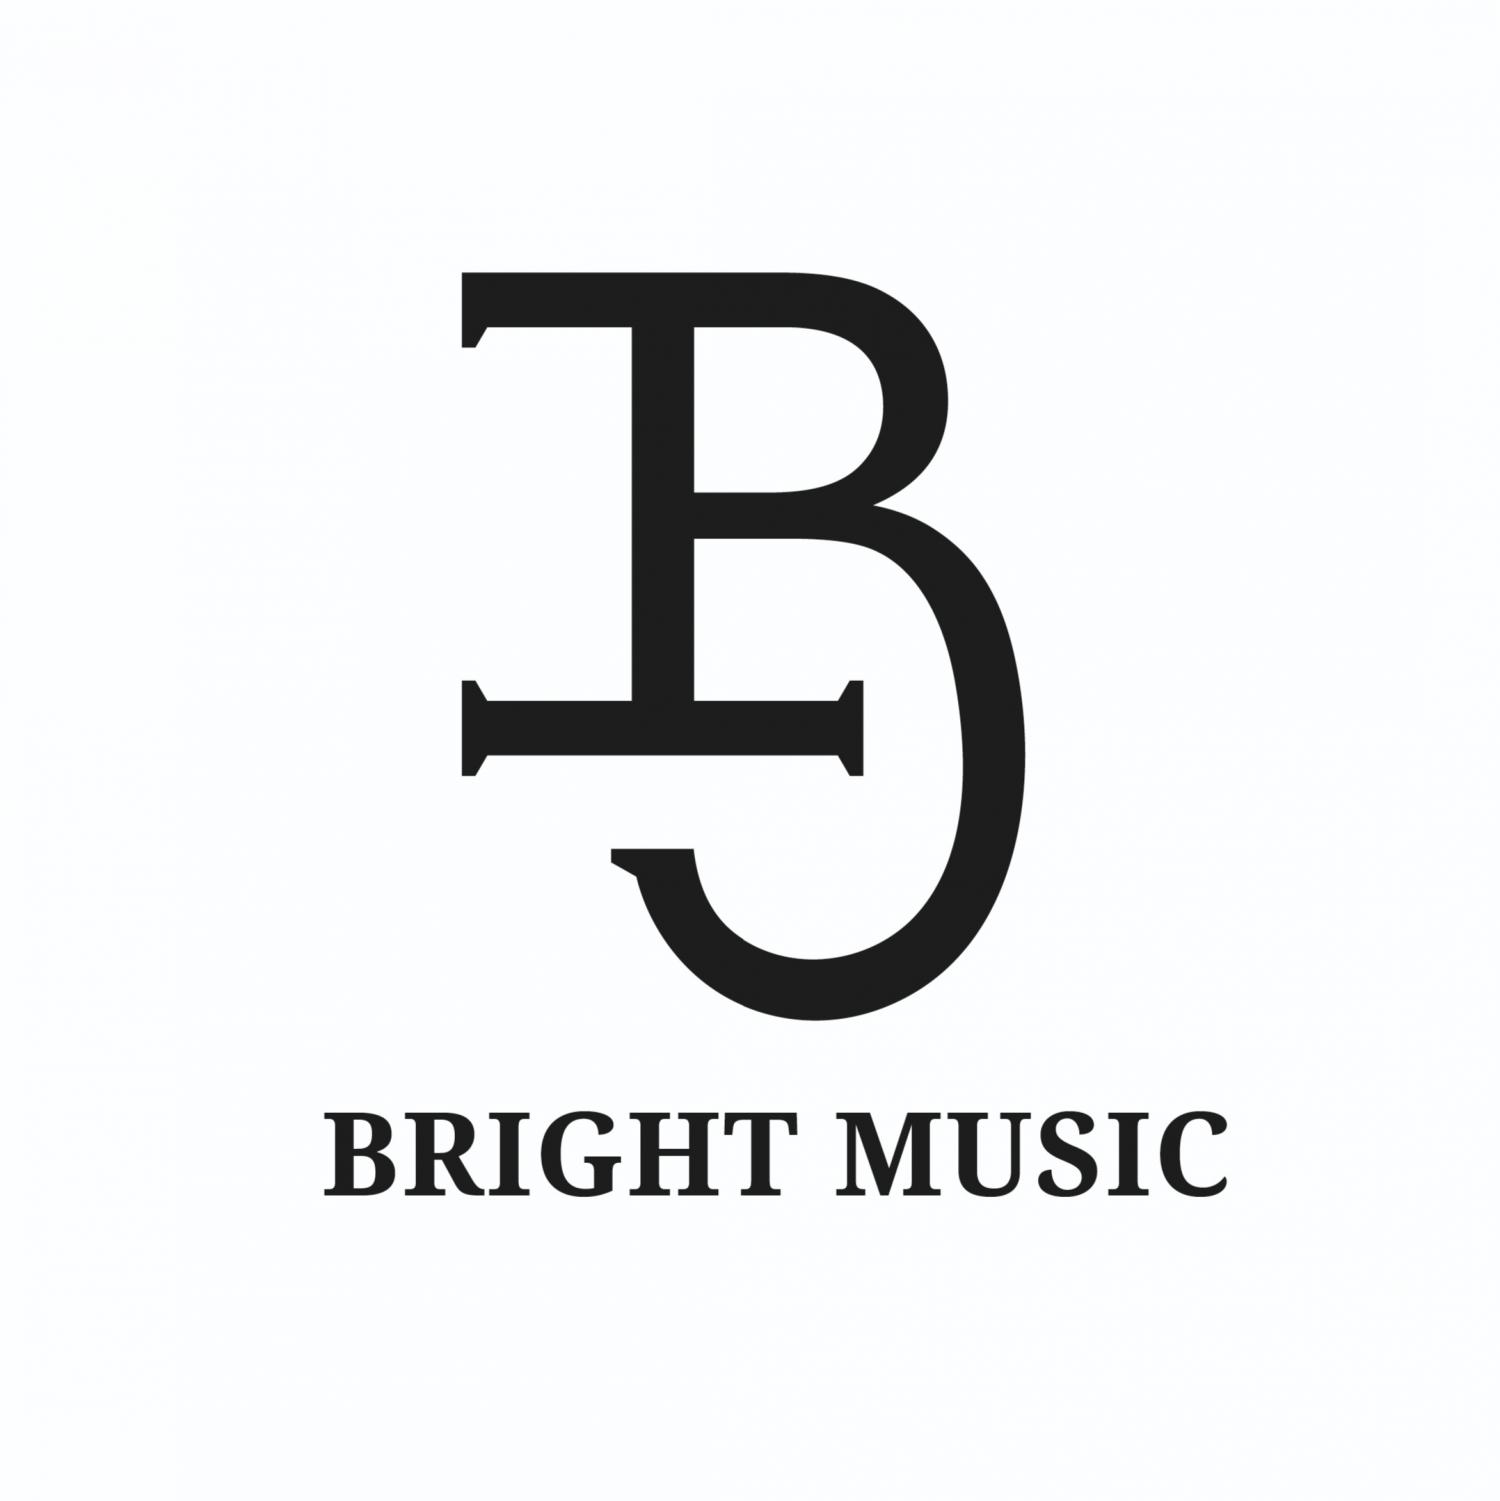 brightmusic logo(symbol).jpg